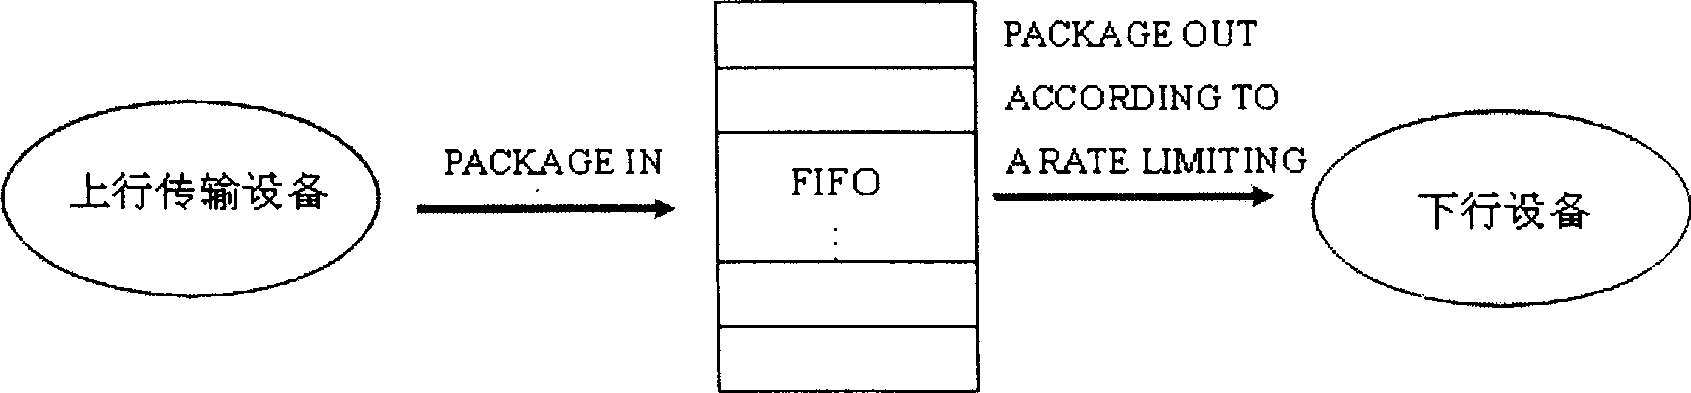 Method for controlling flow of data transmisison